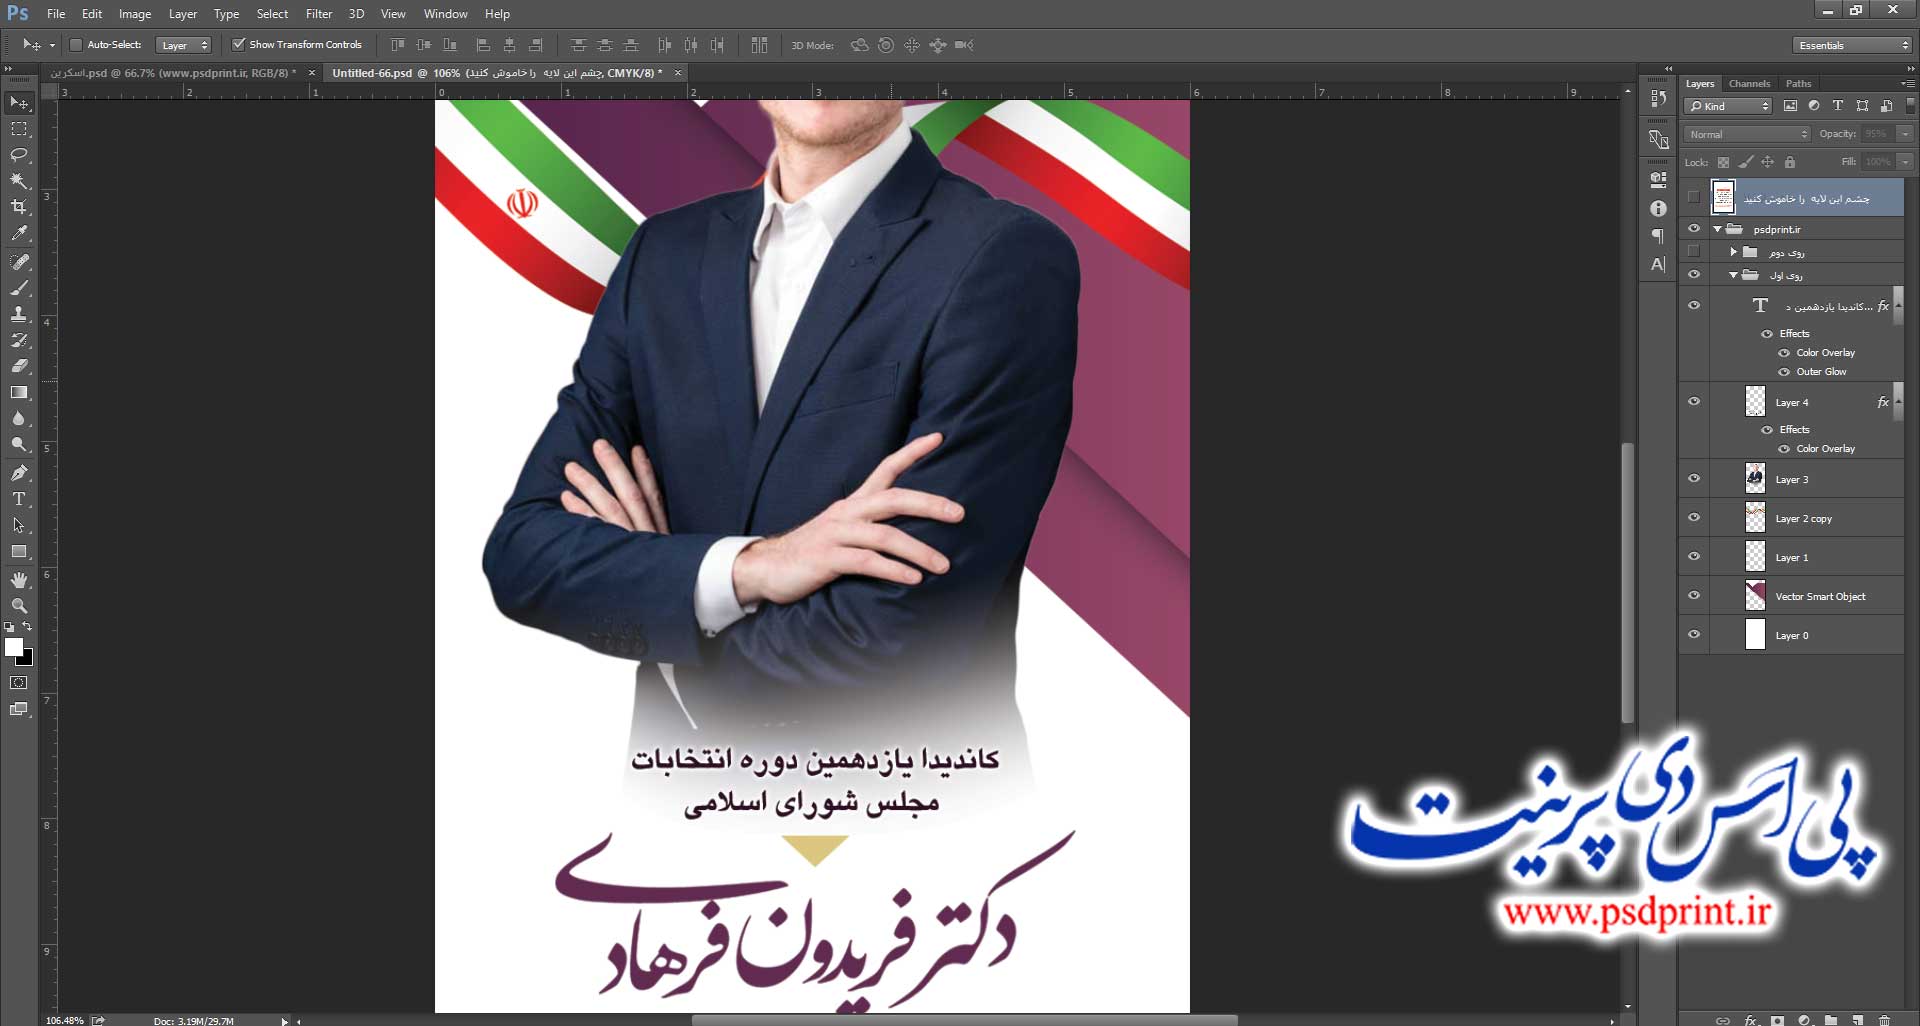 کارت ویزیت انتخابات مجلس لایه باز